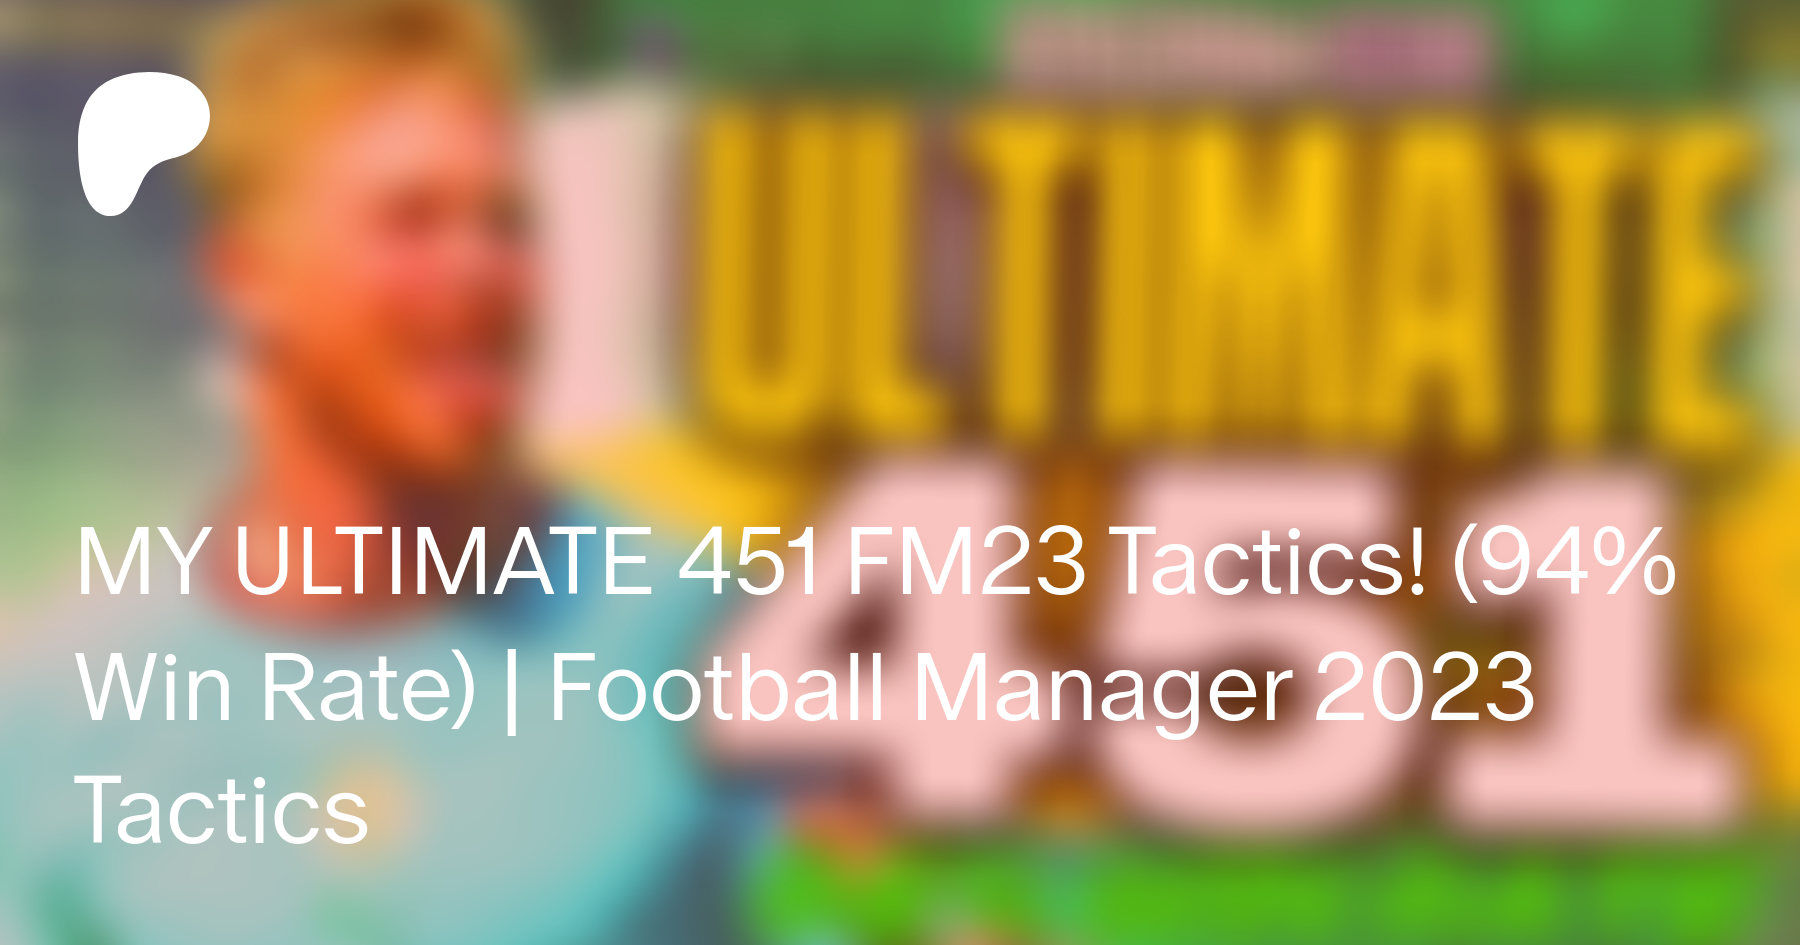 MY ULTIMATE 451 FM23 Tactics! (94% Win Rate)